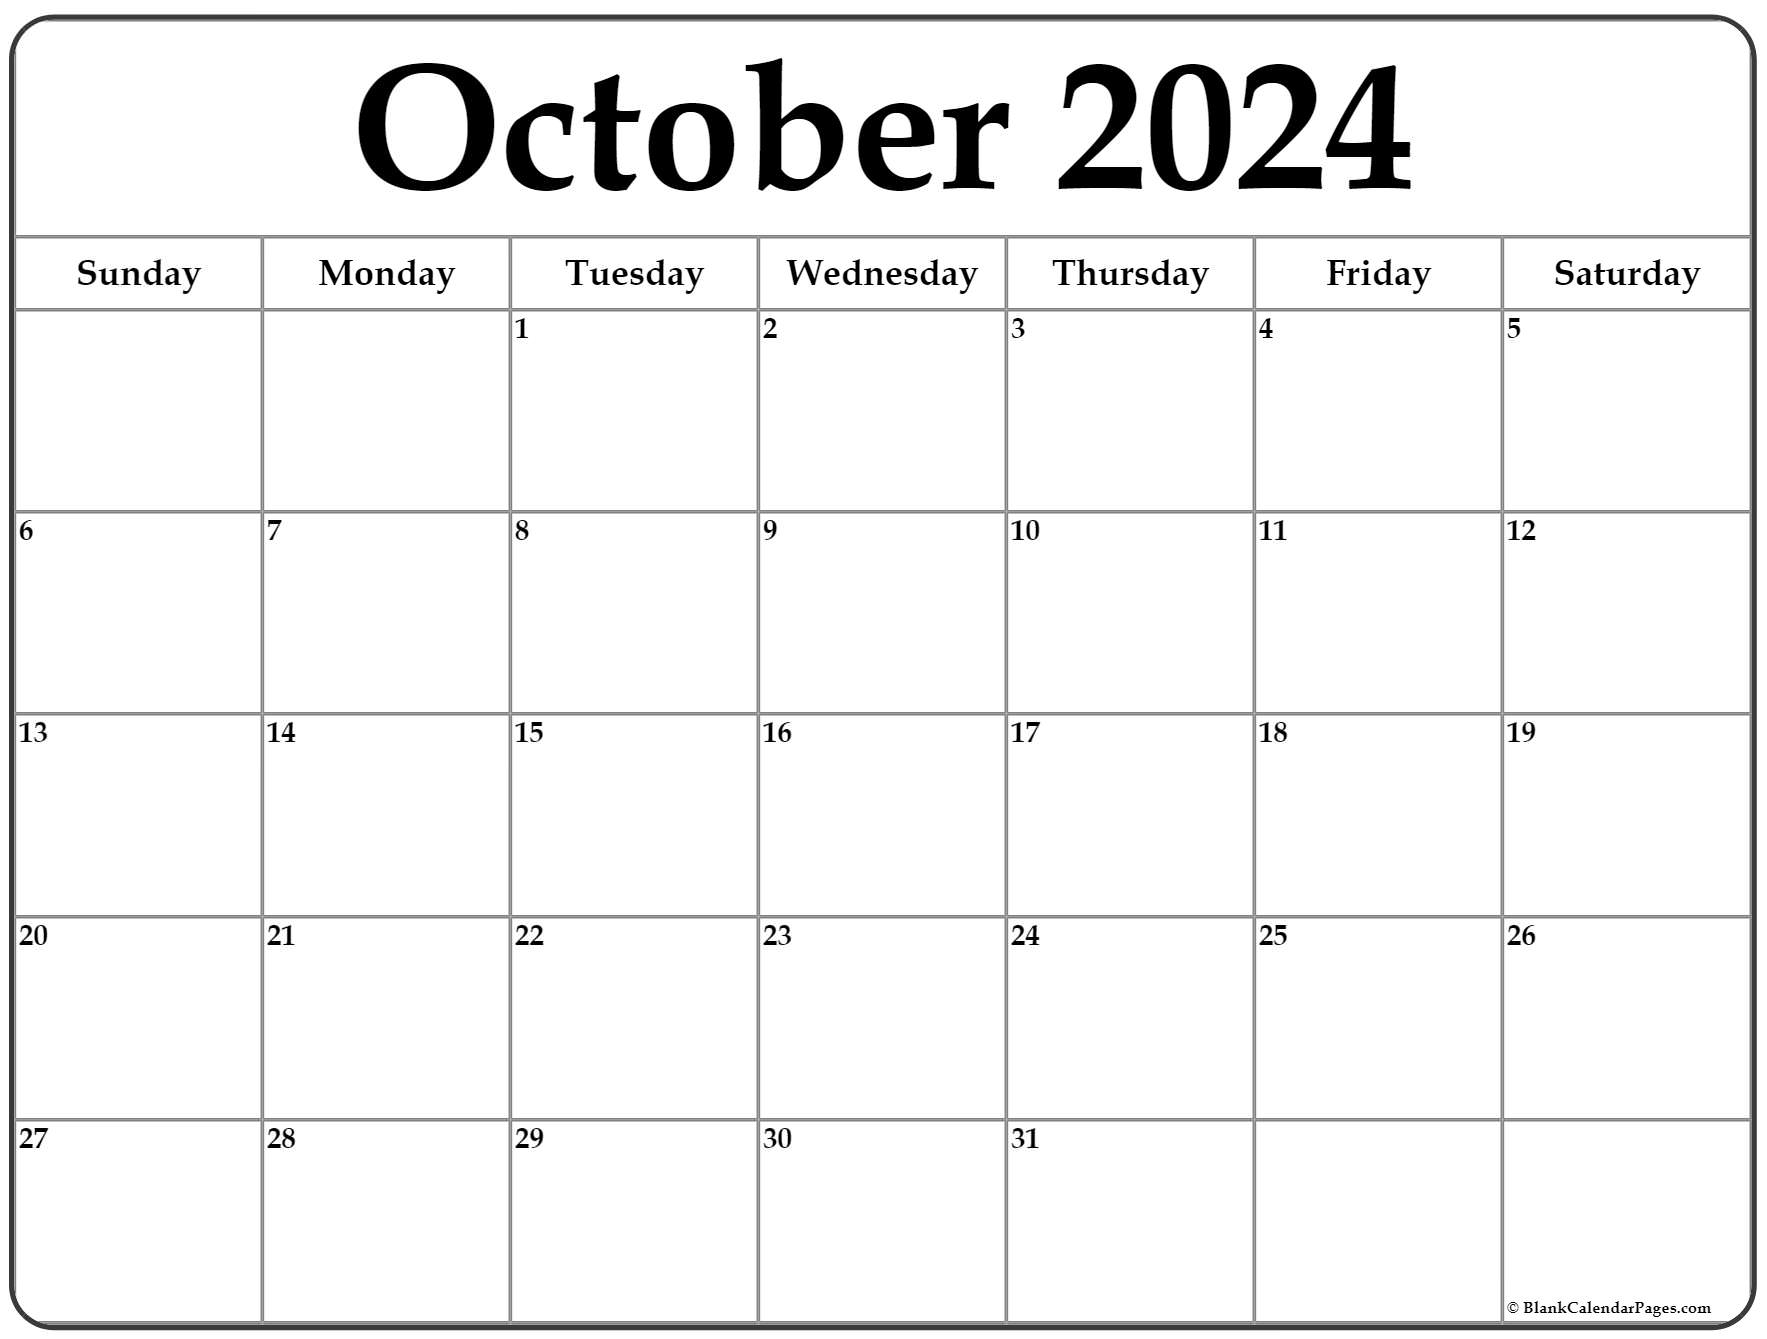 Print Calendar October 2022 October 2022 Calendar | Free Printable Calendar Templates